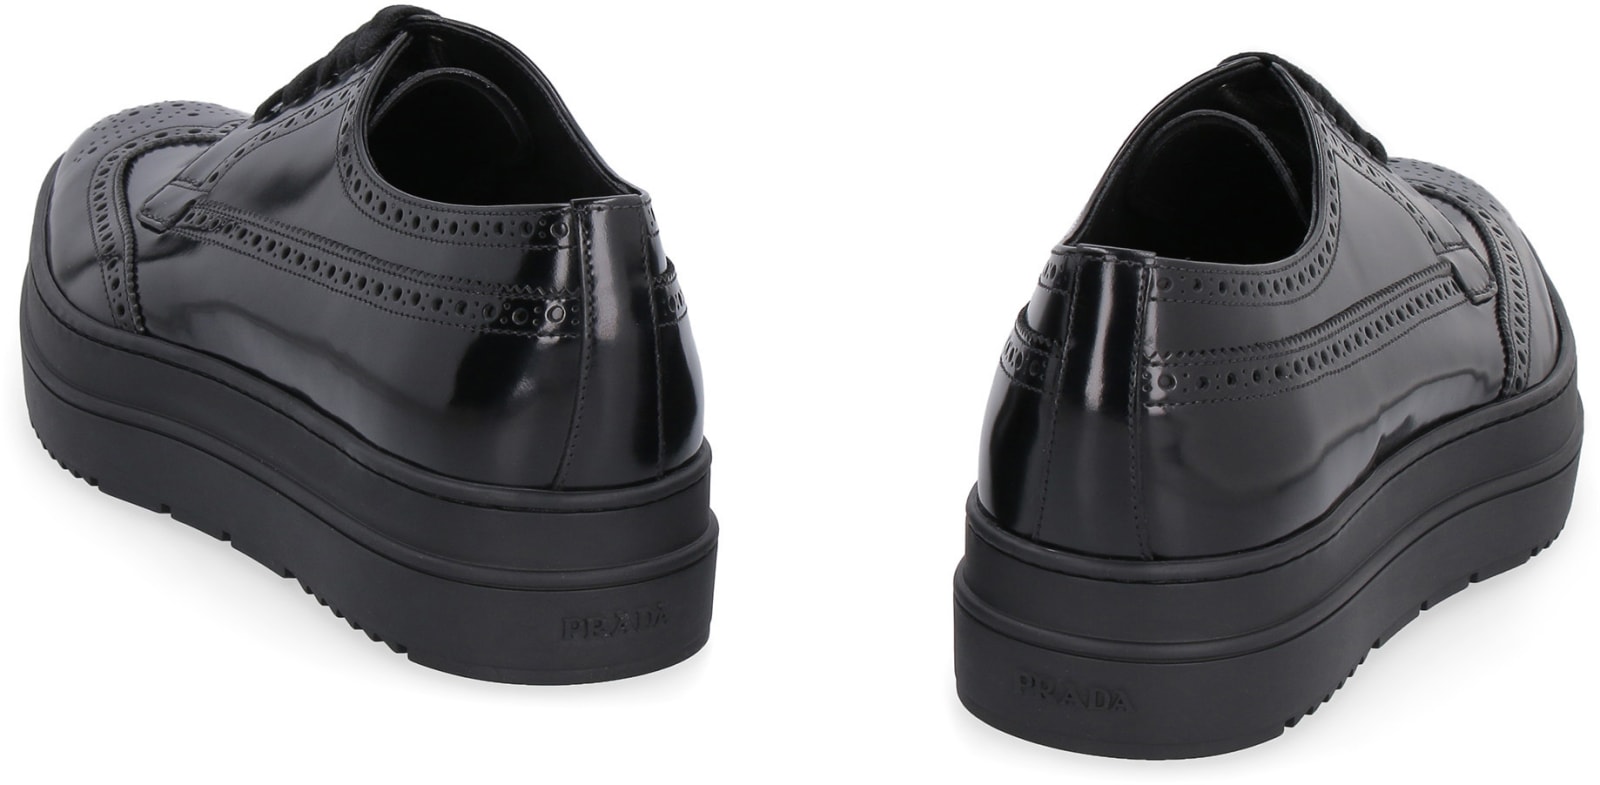 Prada Prada Leather Lace Up Derby Shoes Black 11008205 Italist